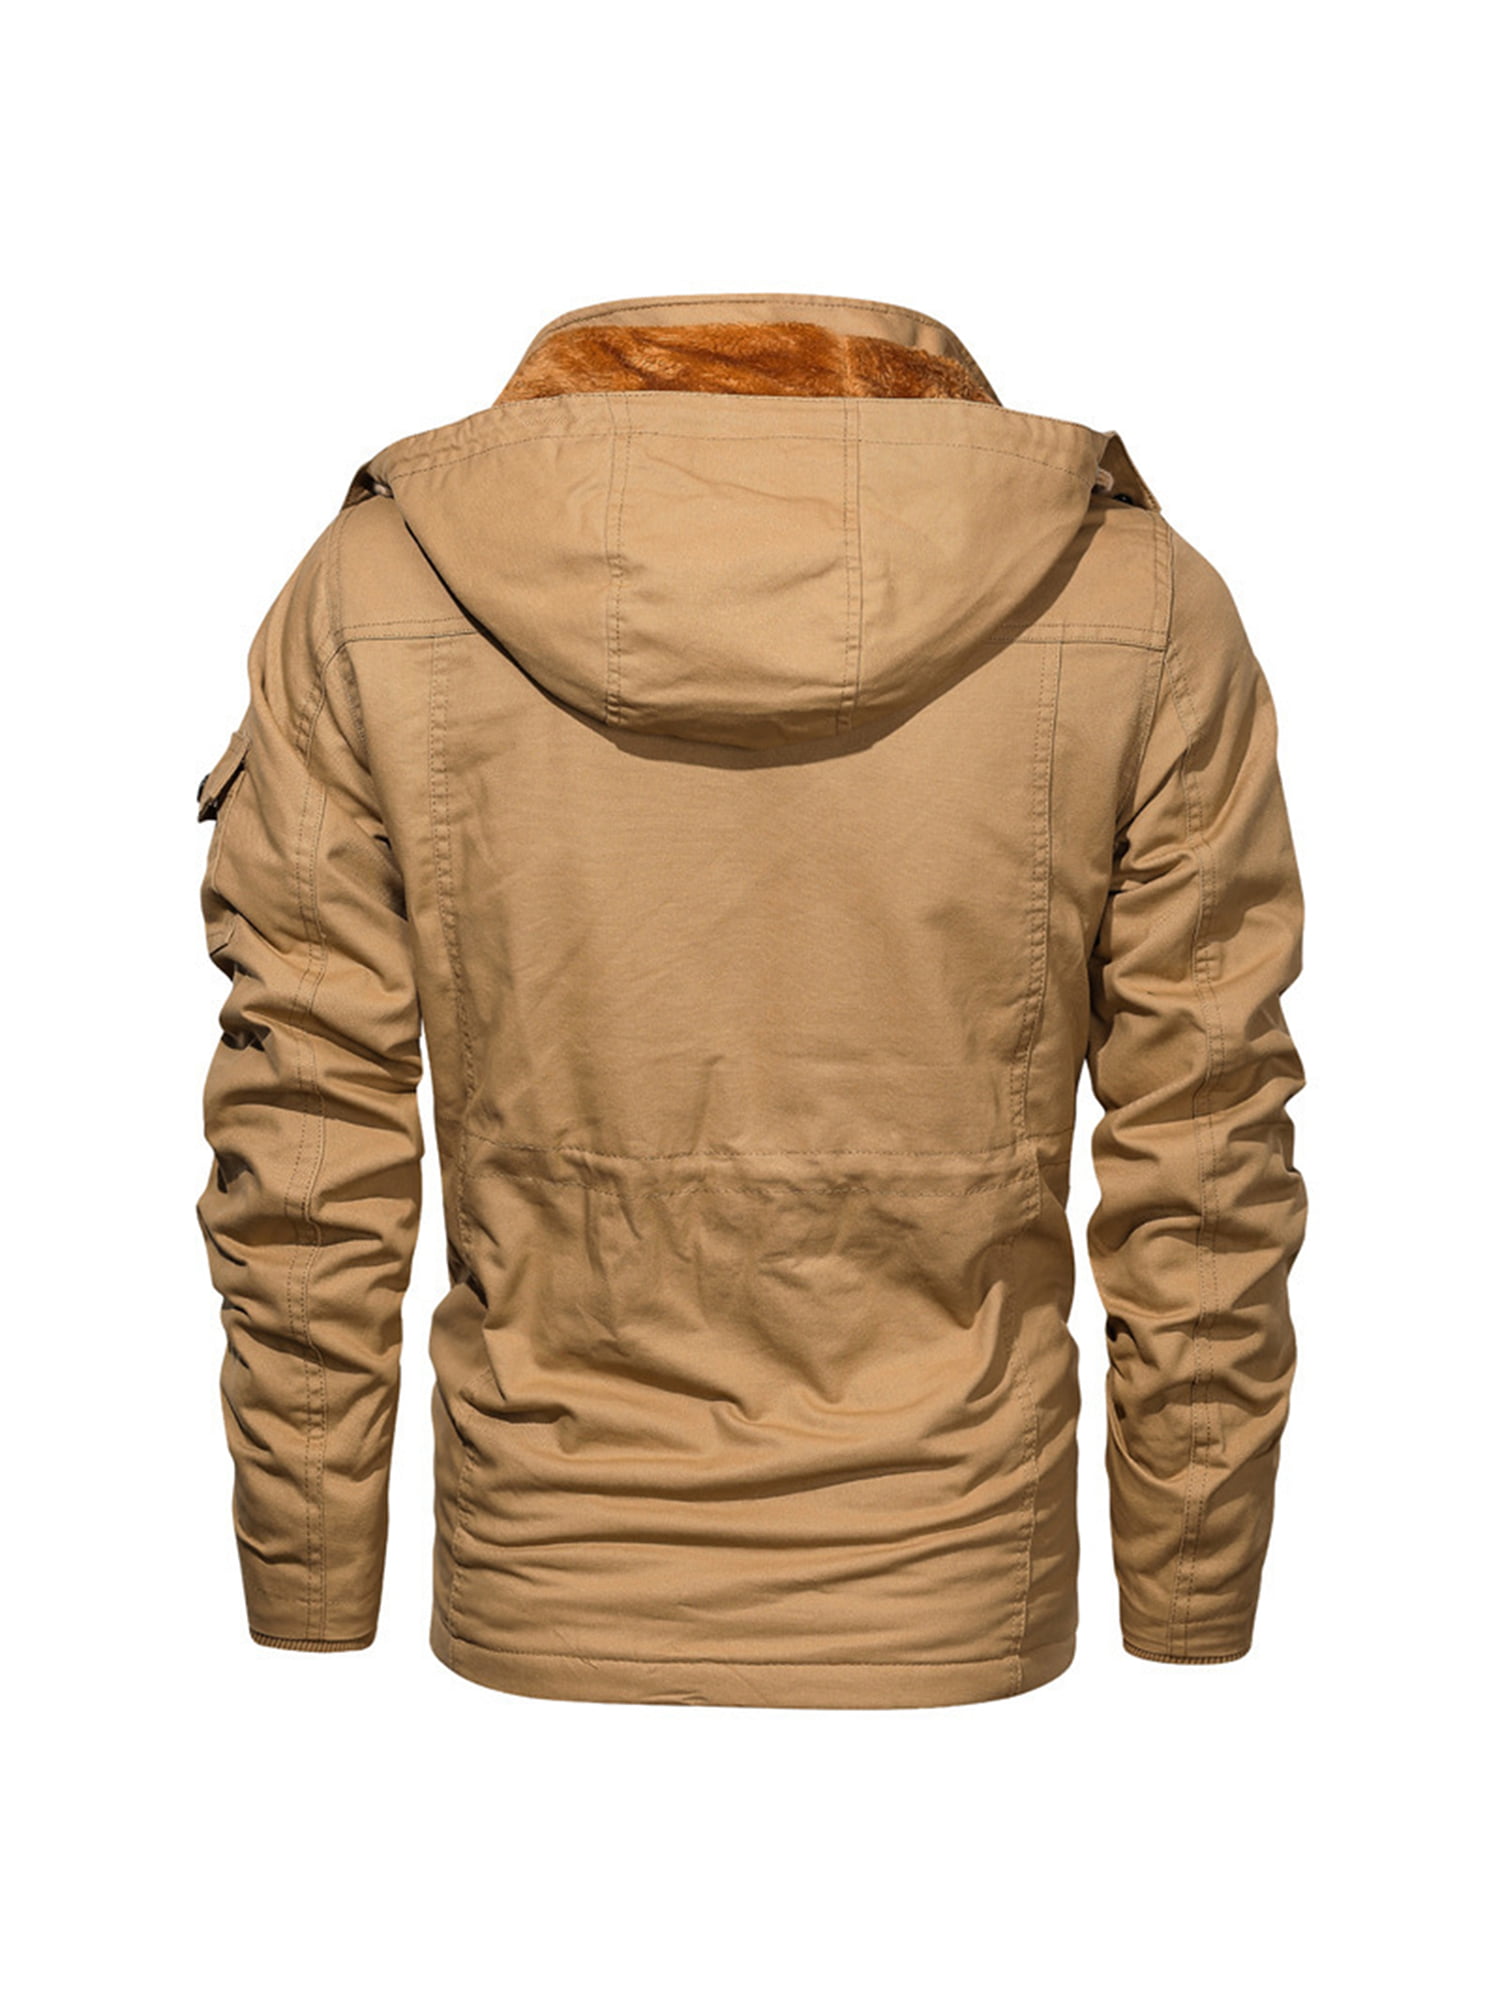 Men's Fleece Military Jacket with Hood and Full Zipper Fall Winter Jackets Multi-Pockets Tactical Jacket 